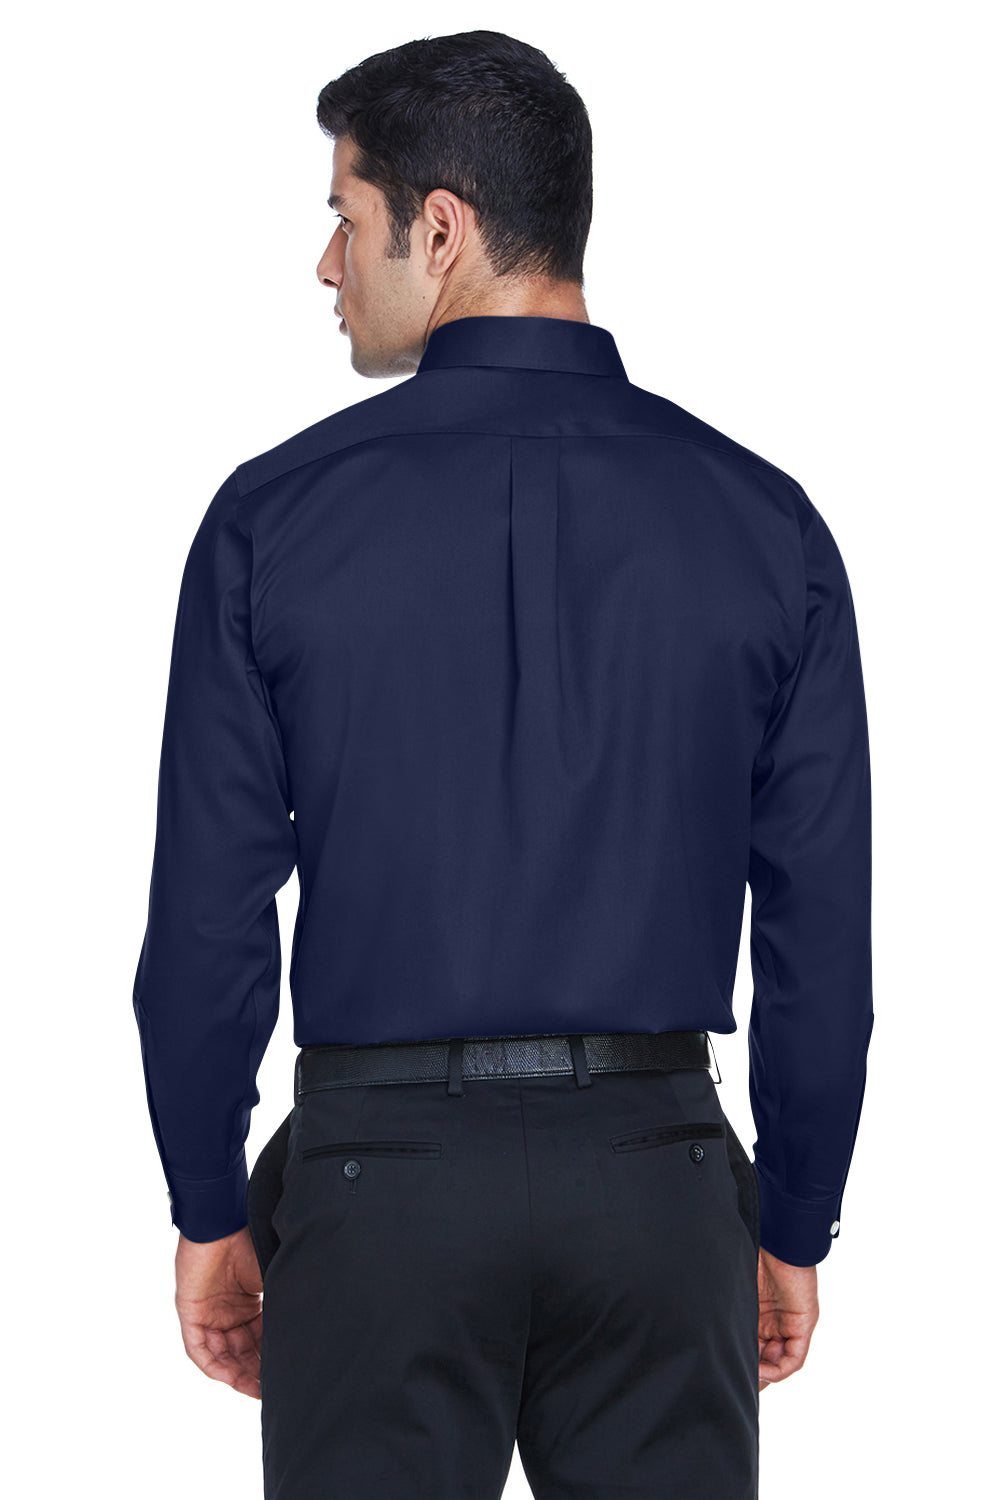 Devon & Jones DG530 Mens Crown Woven Collection Wrinkle Resistant Long Sleeve Button Down Shirt w/ Pocket Navy Blue Back